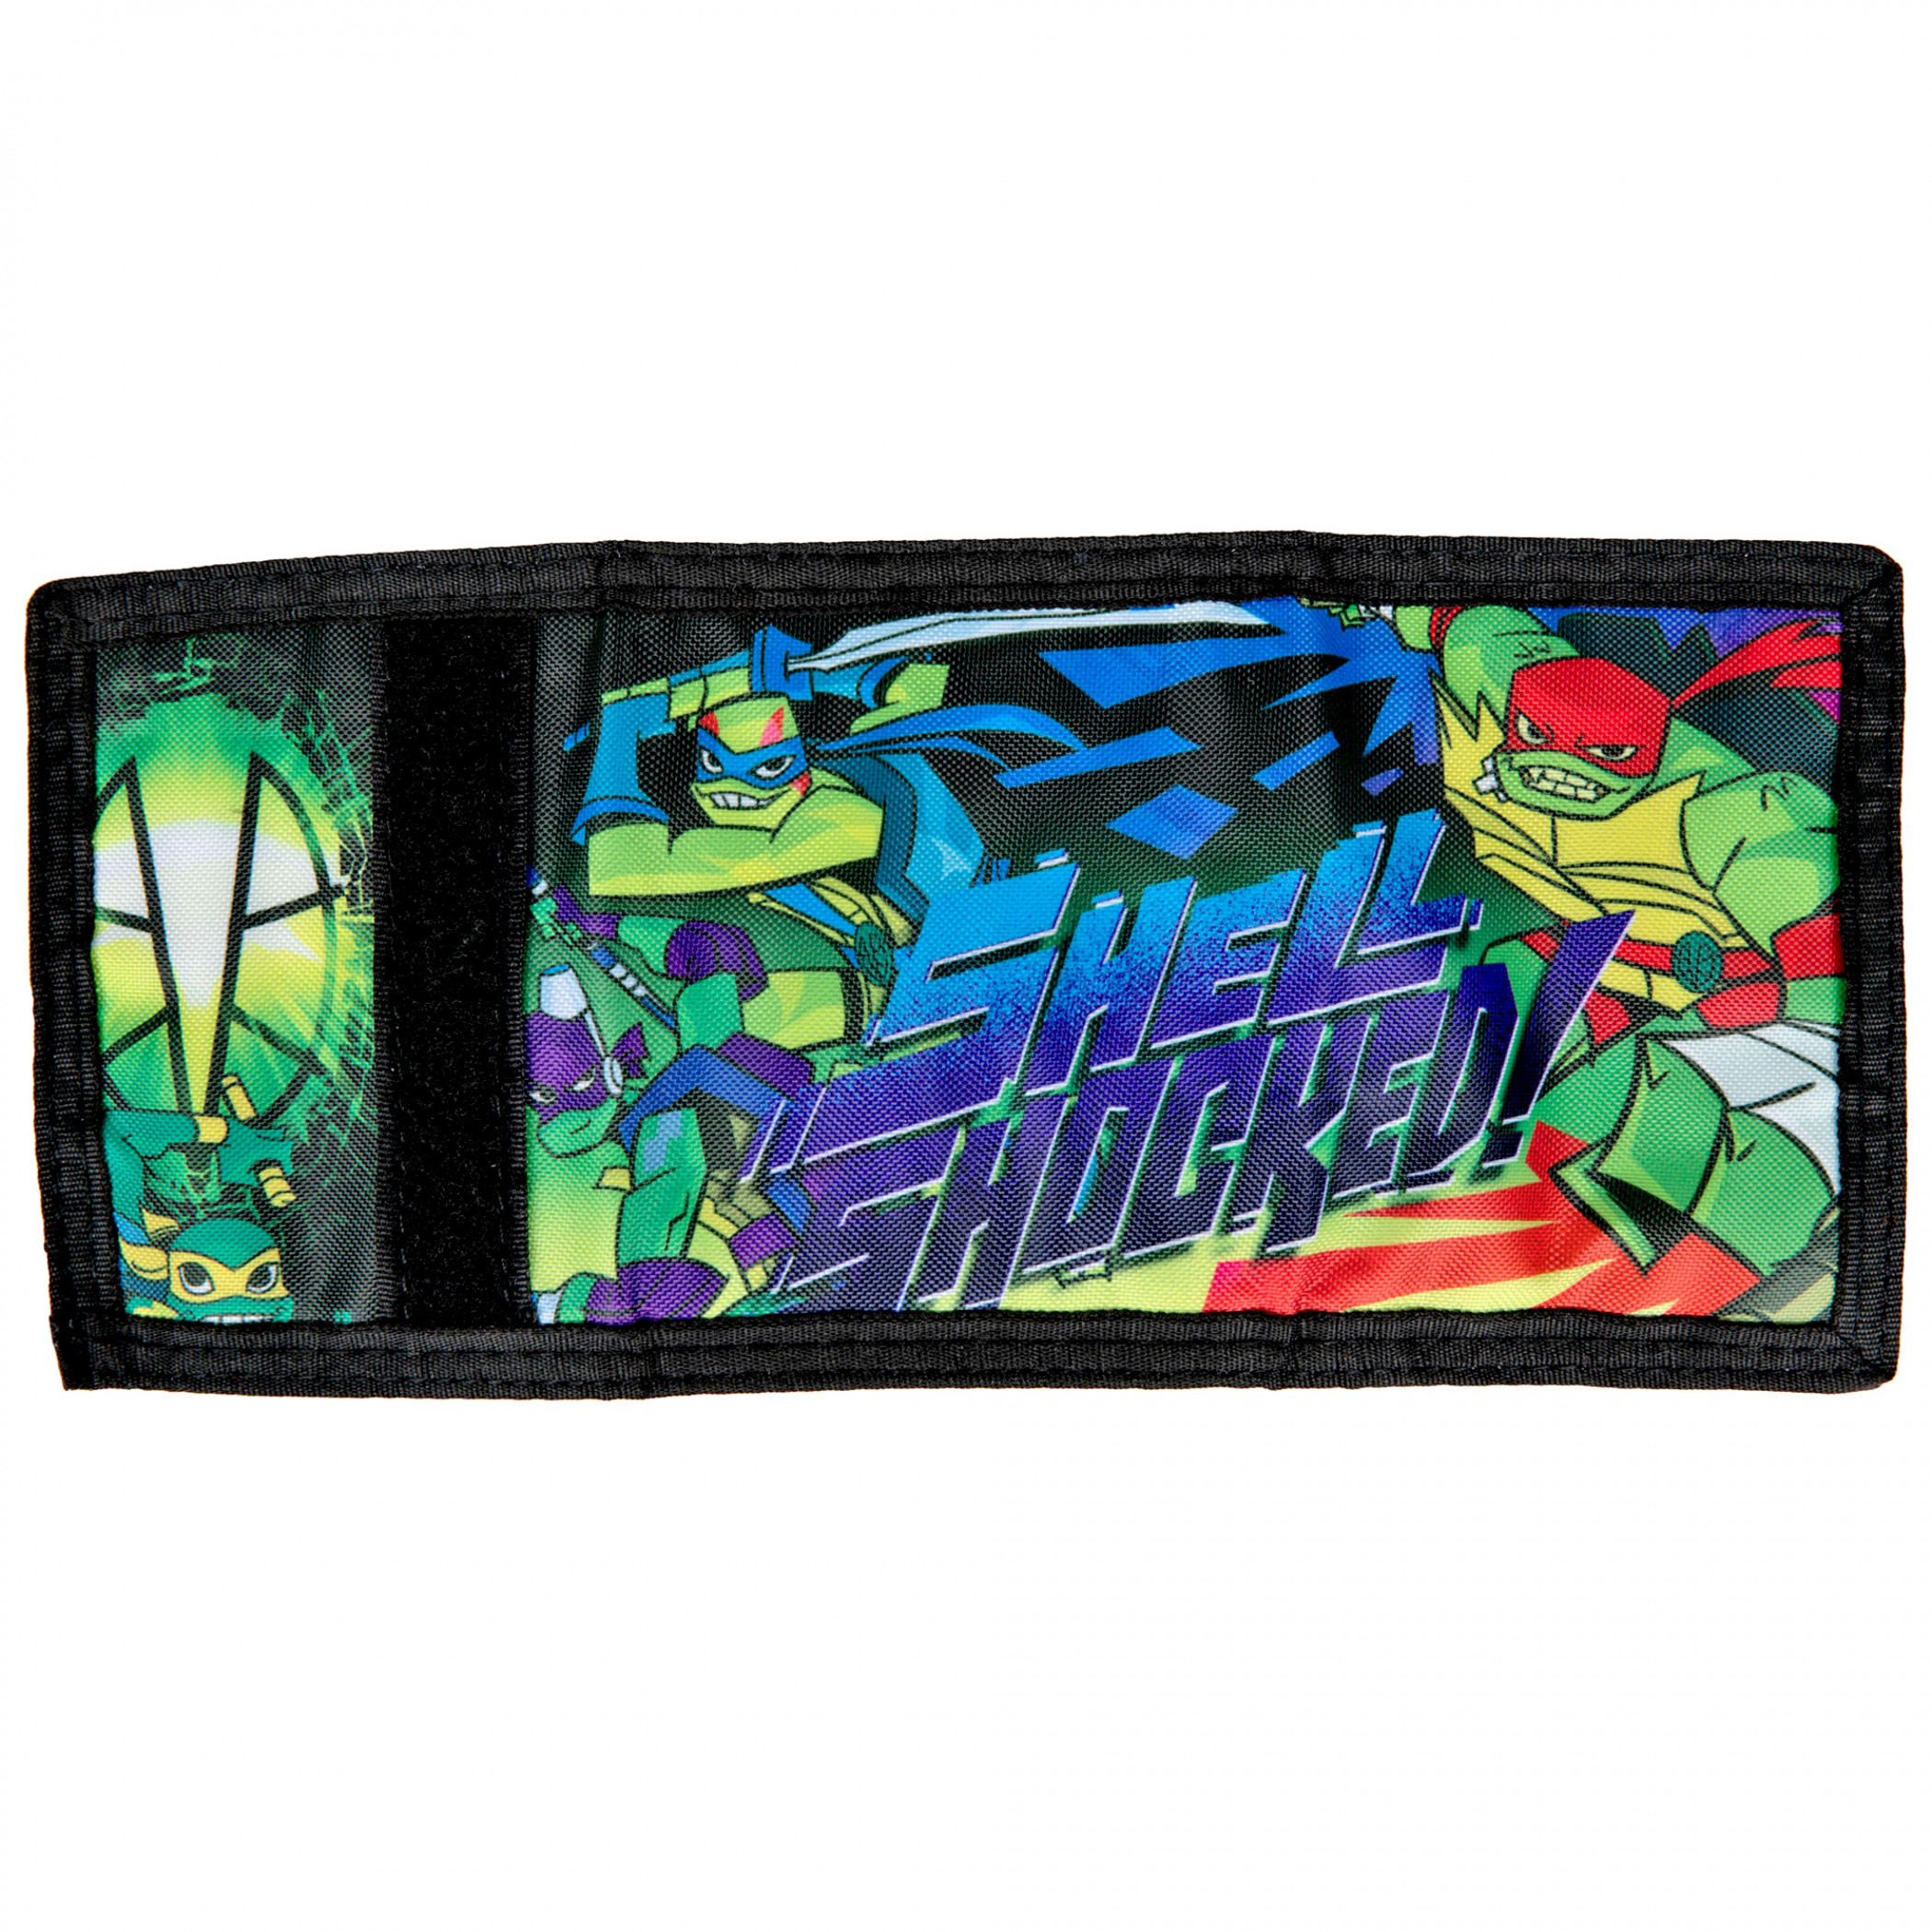 Nickelodeon Teenage Mutant Ninja Turtles Trifold Velcro Wallet